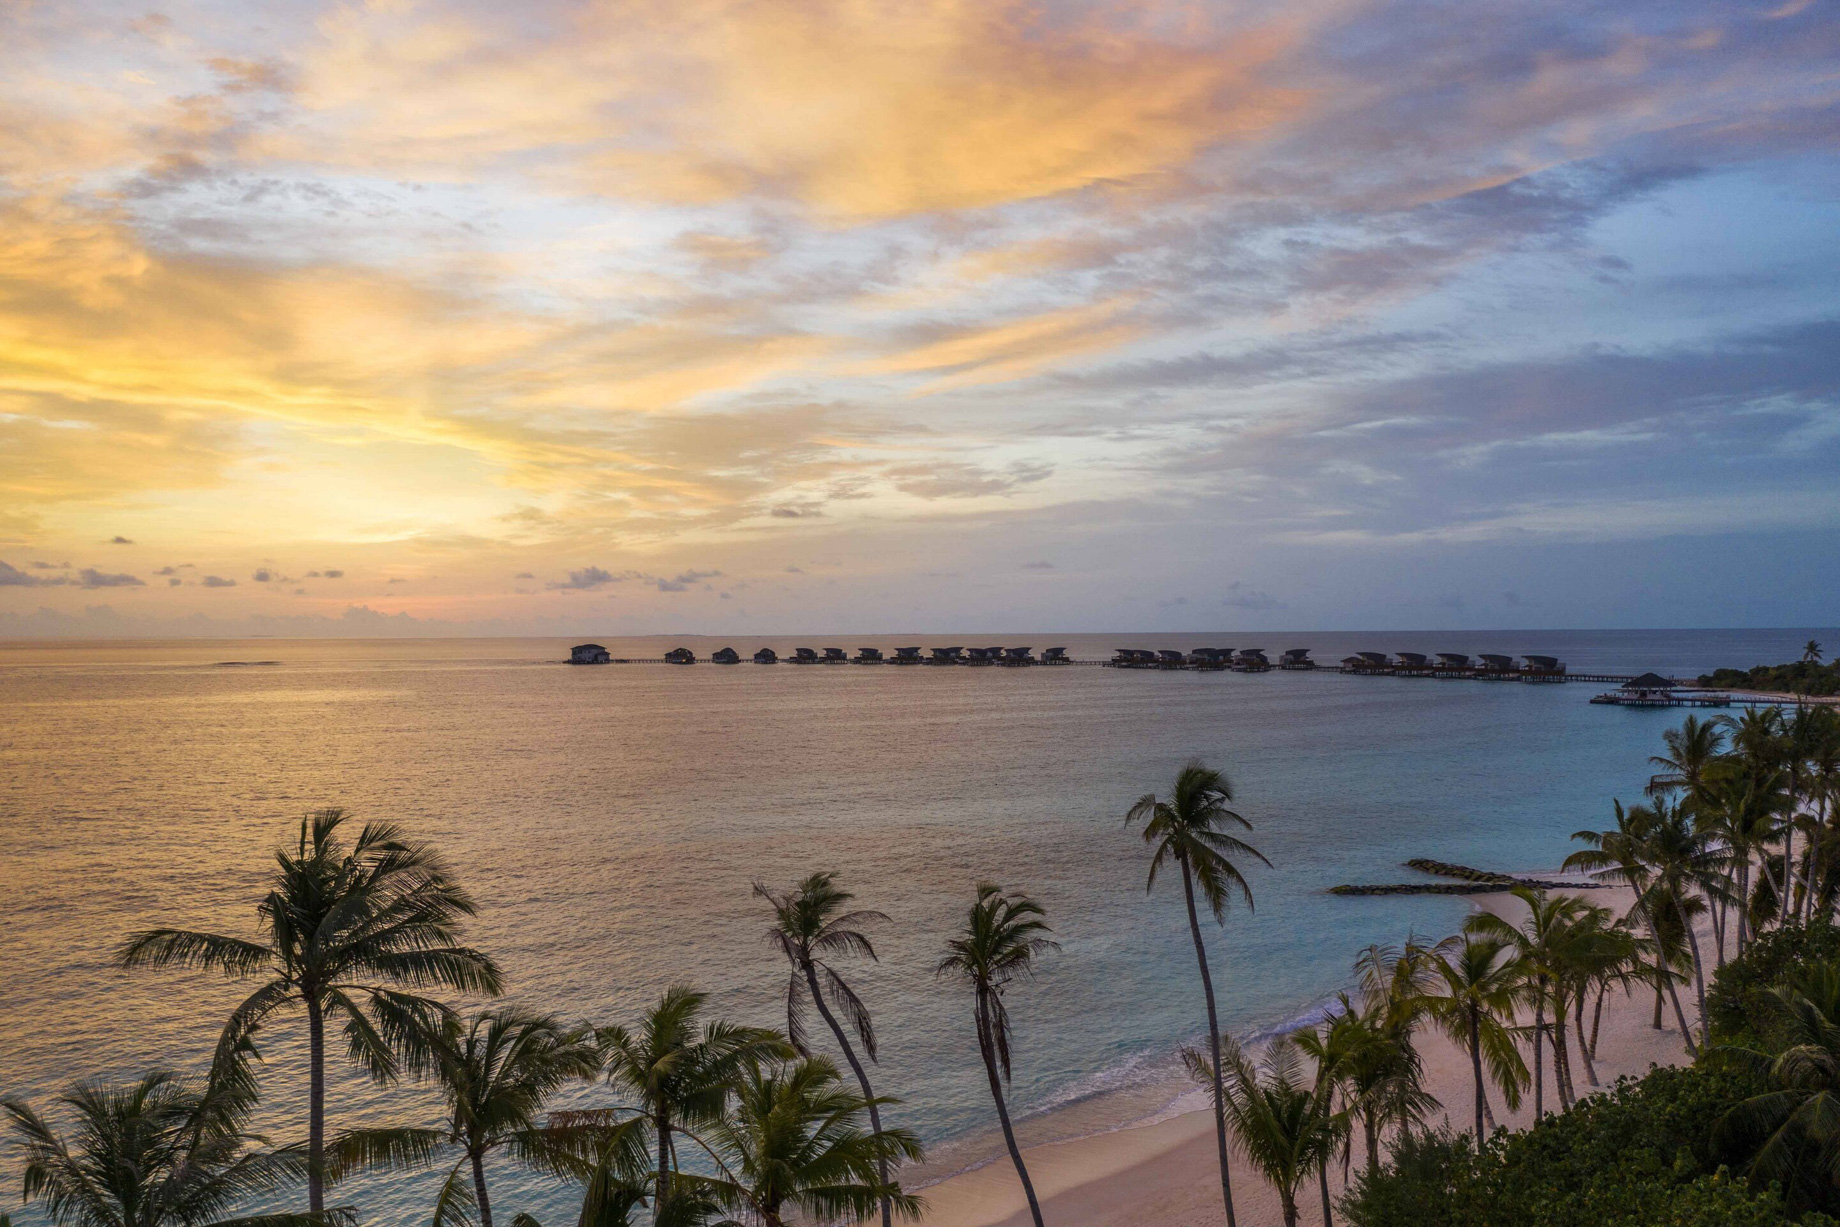 JW Marriott Maldives Resort & Spa – Shaviyani Atoll, Maldives – Sunset View